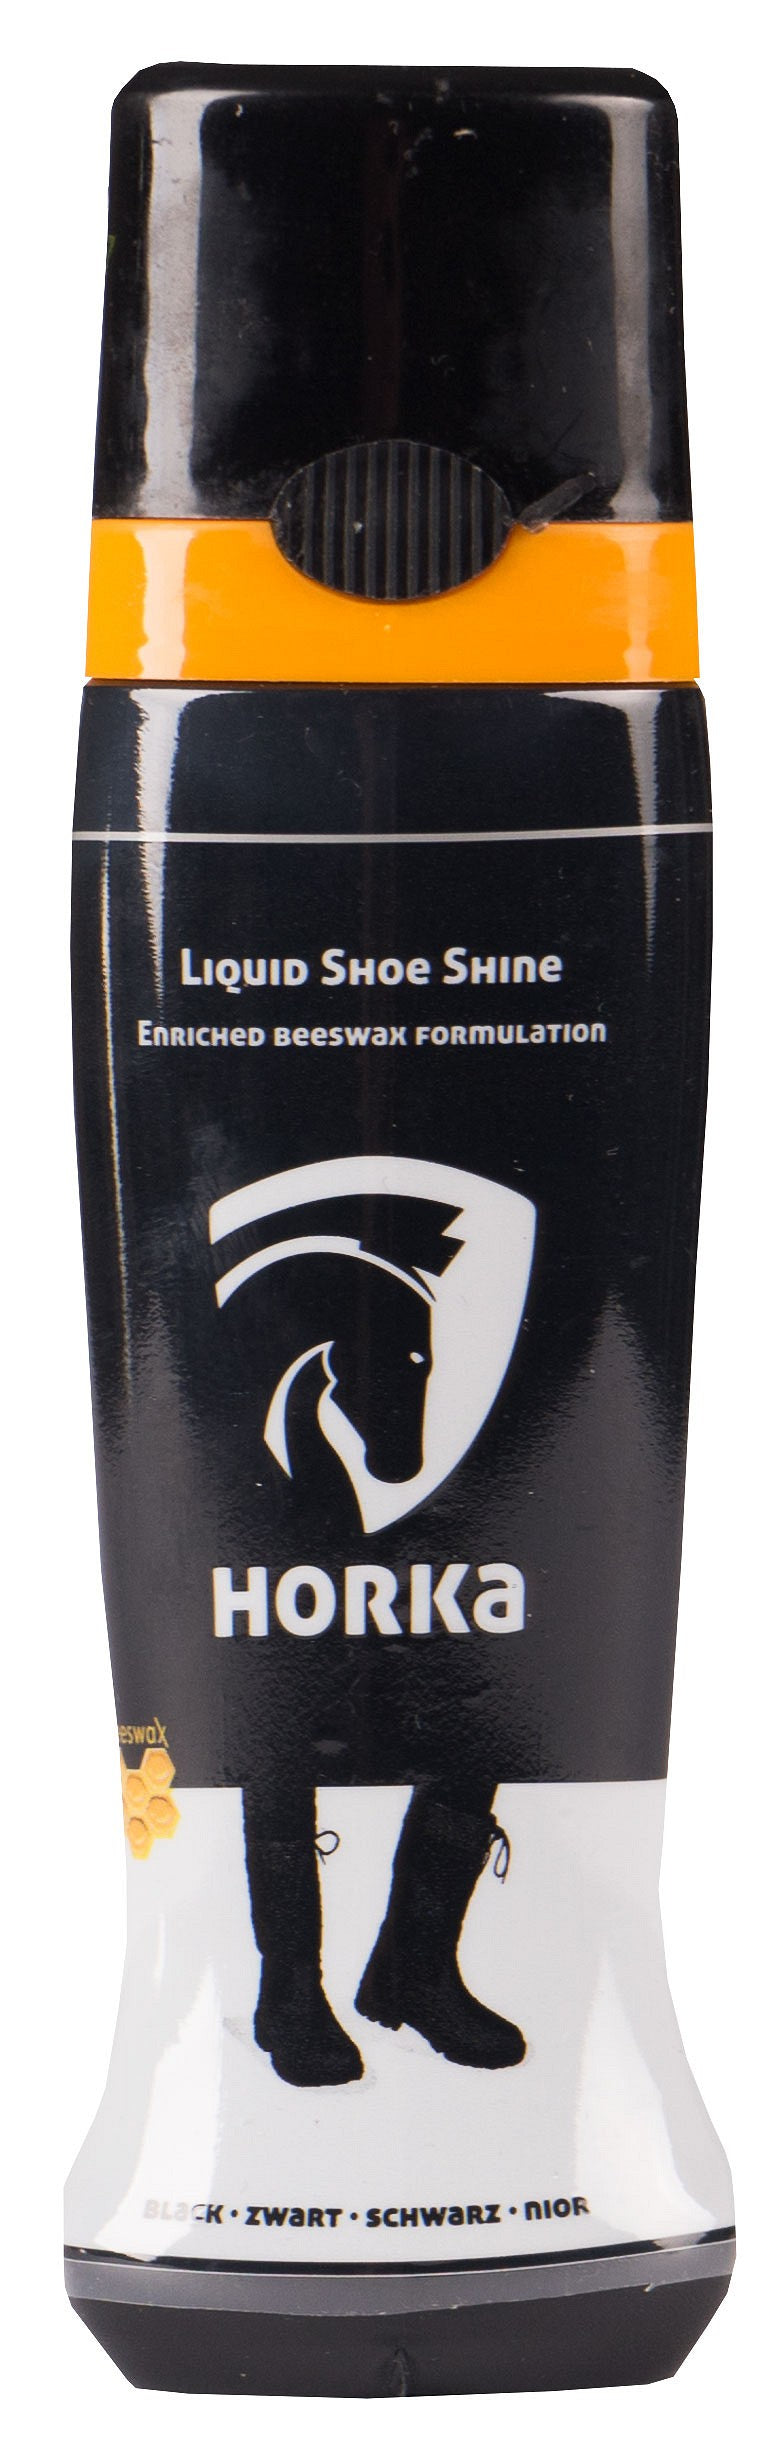 HORKA Liquid Shoe Shine